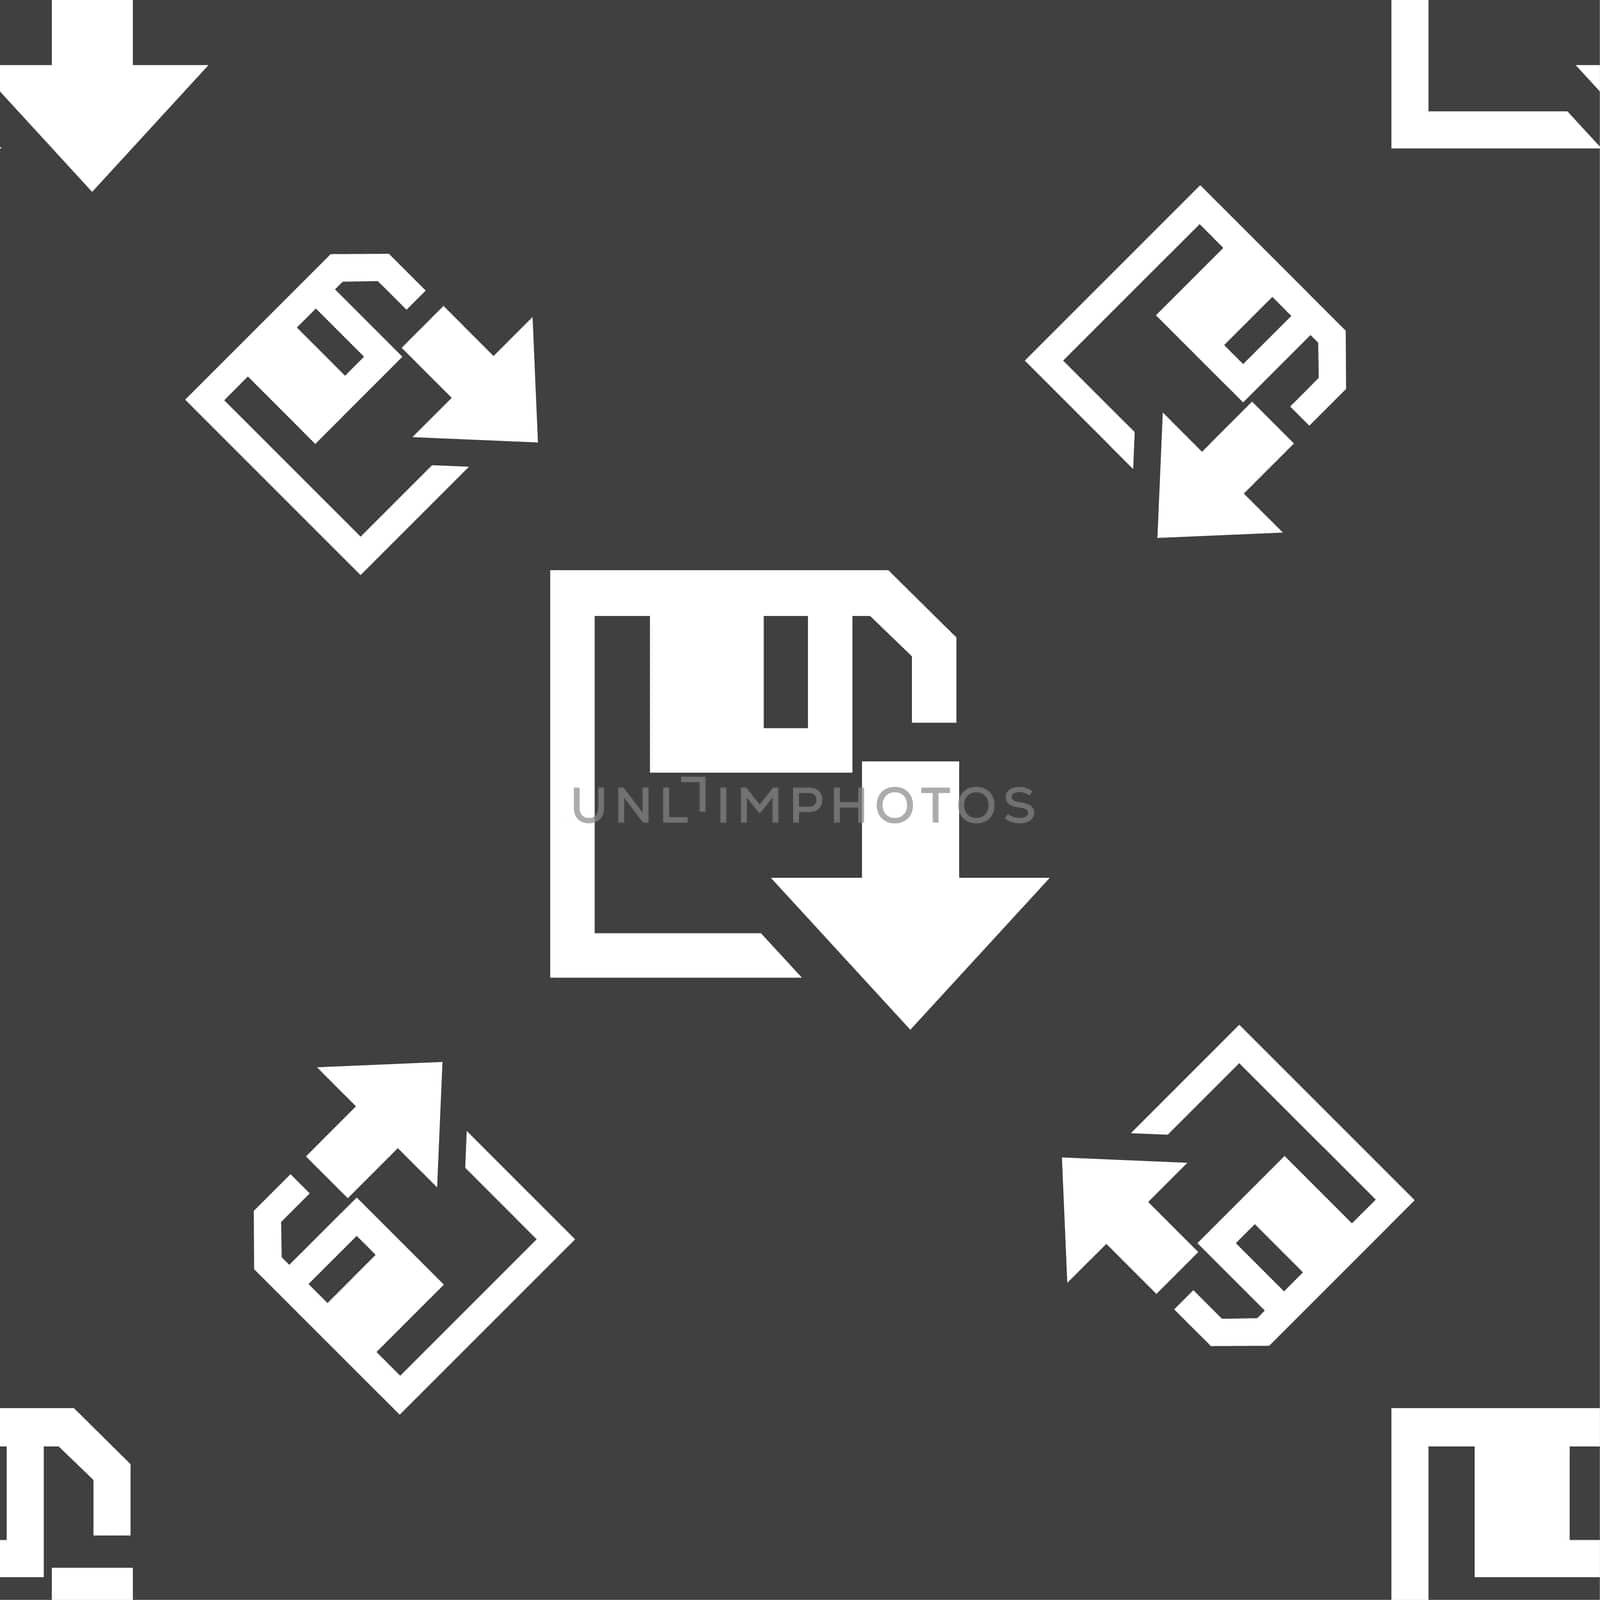 floppy icon. Flat modern design. Seamless pattern on a gray background.  by serhii_lohvyniuk